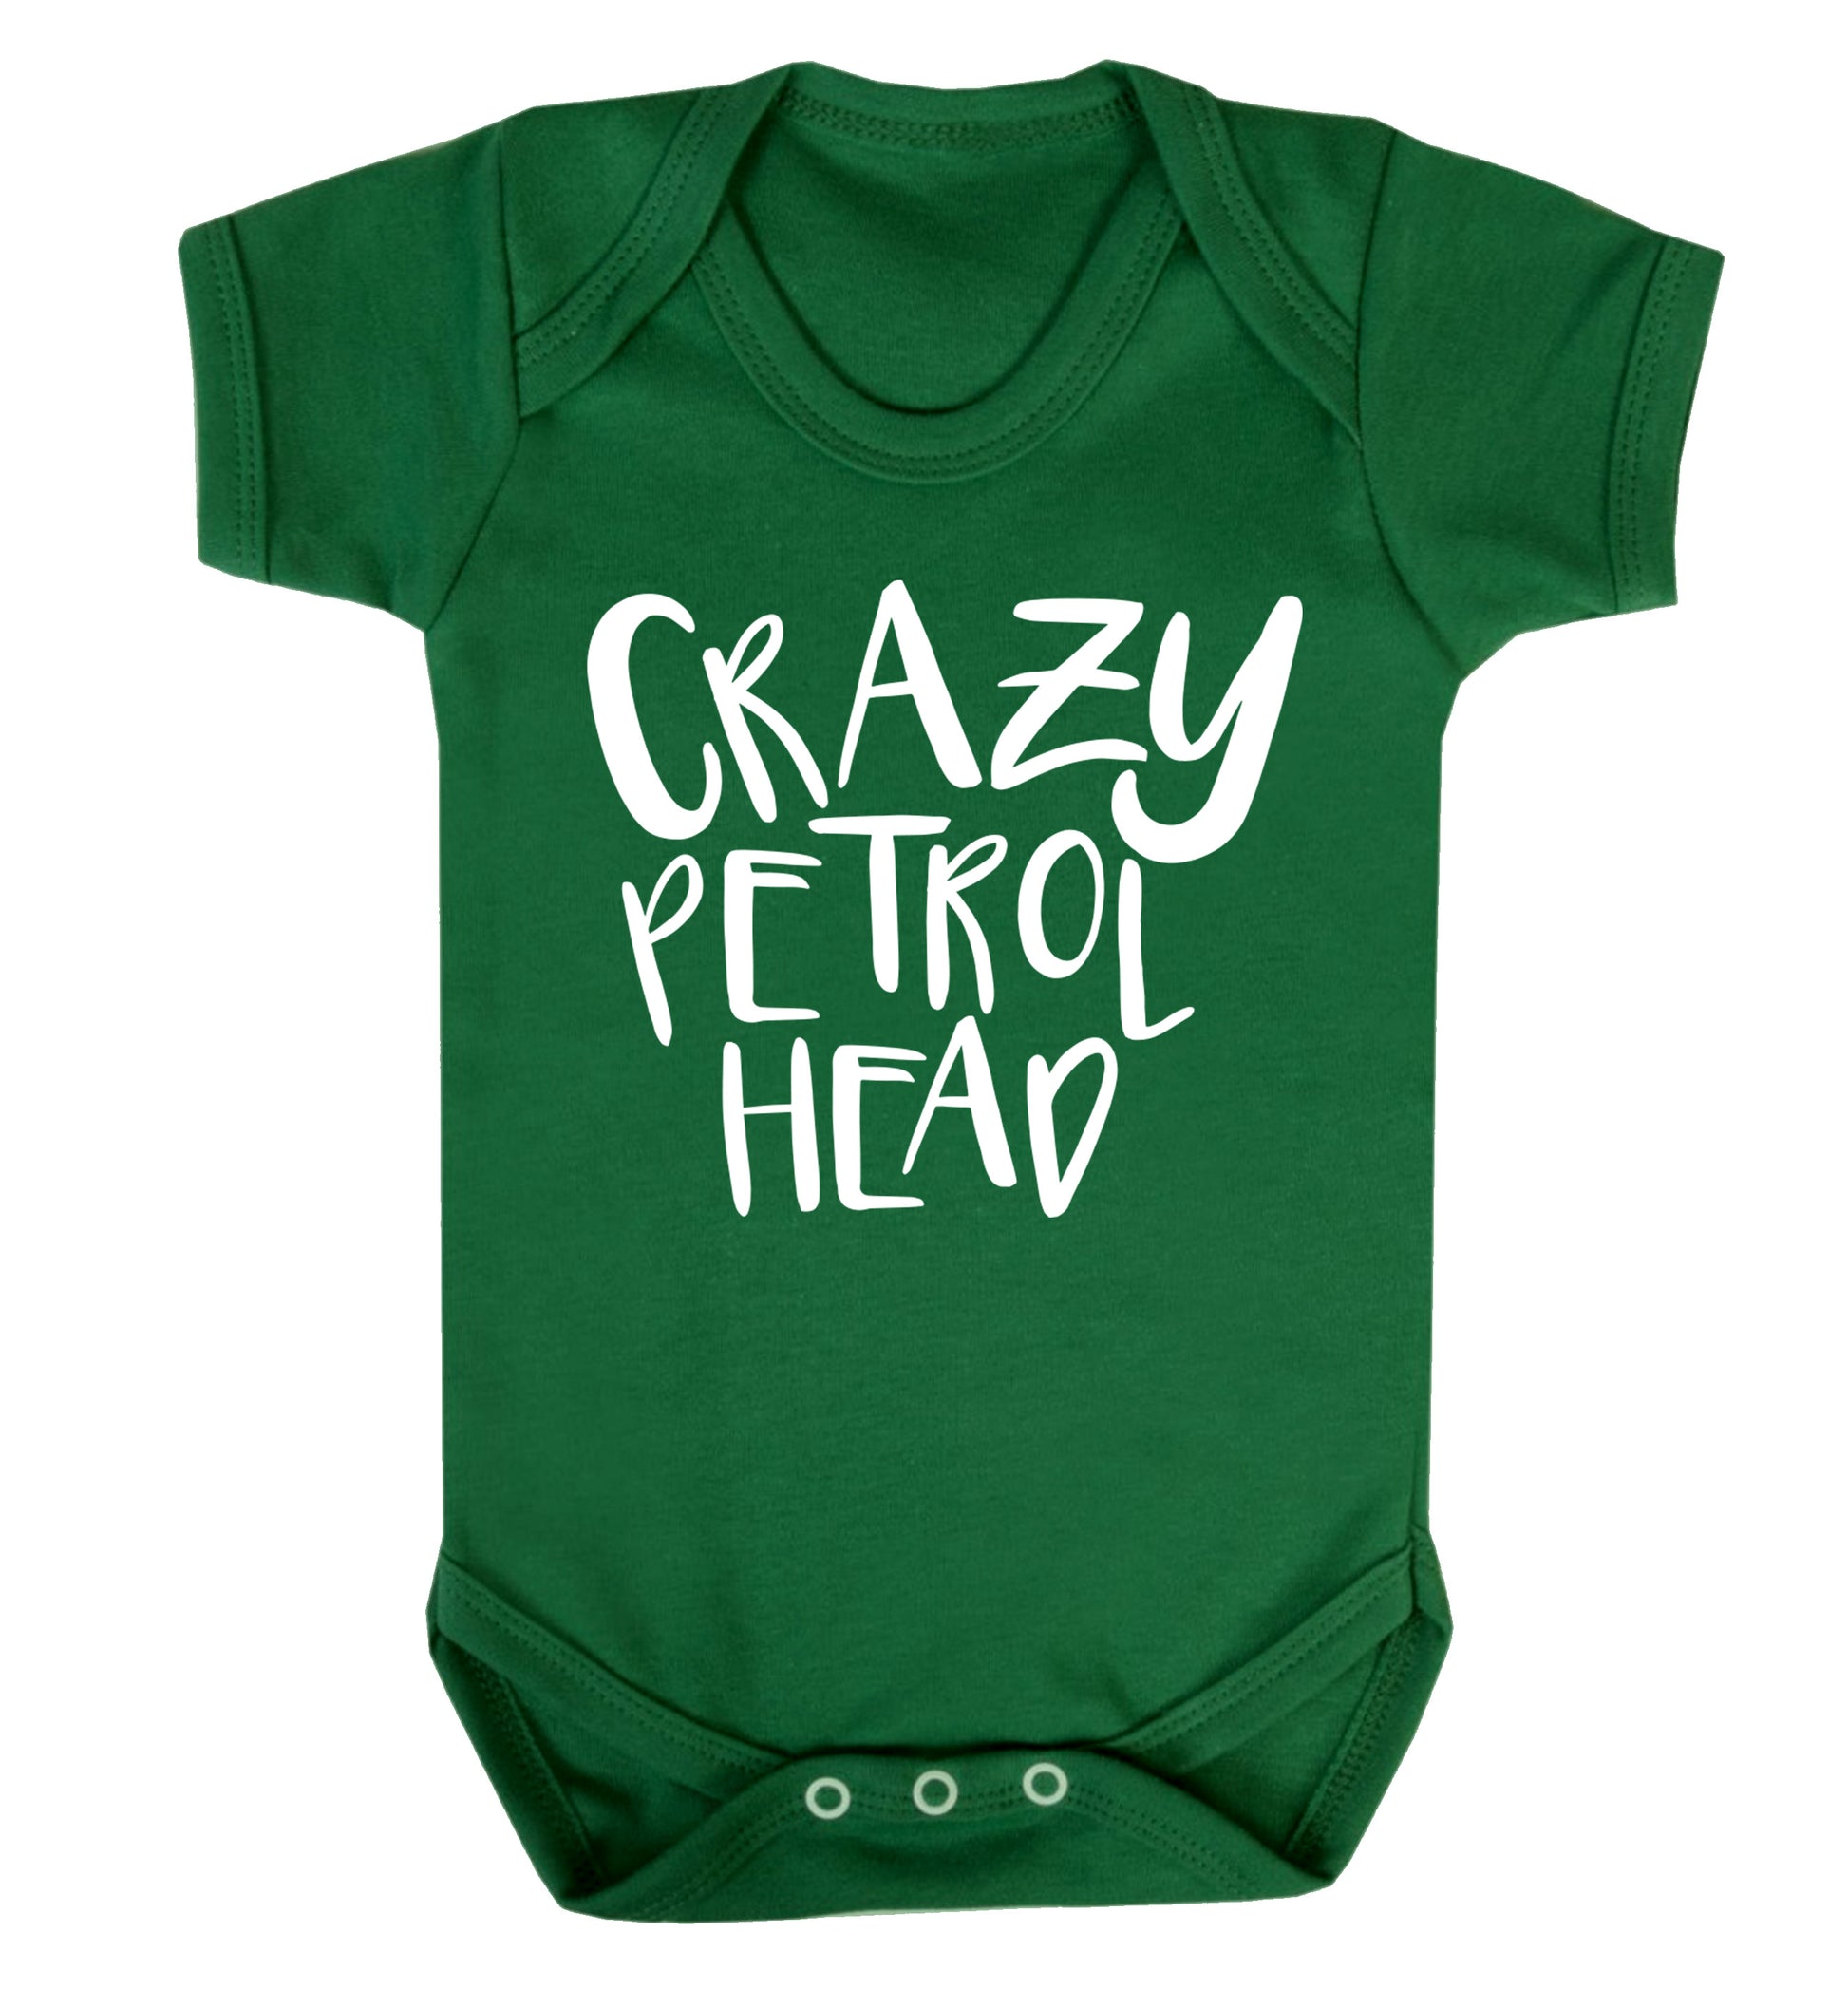 Crazy petrol head Baby Vest green 18-24 months